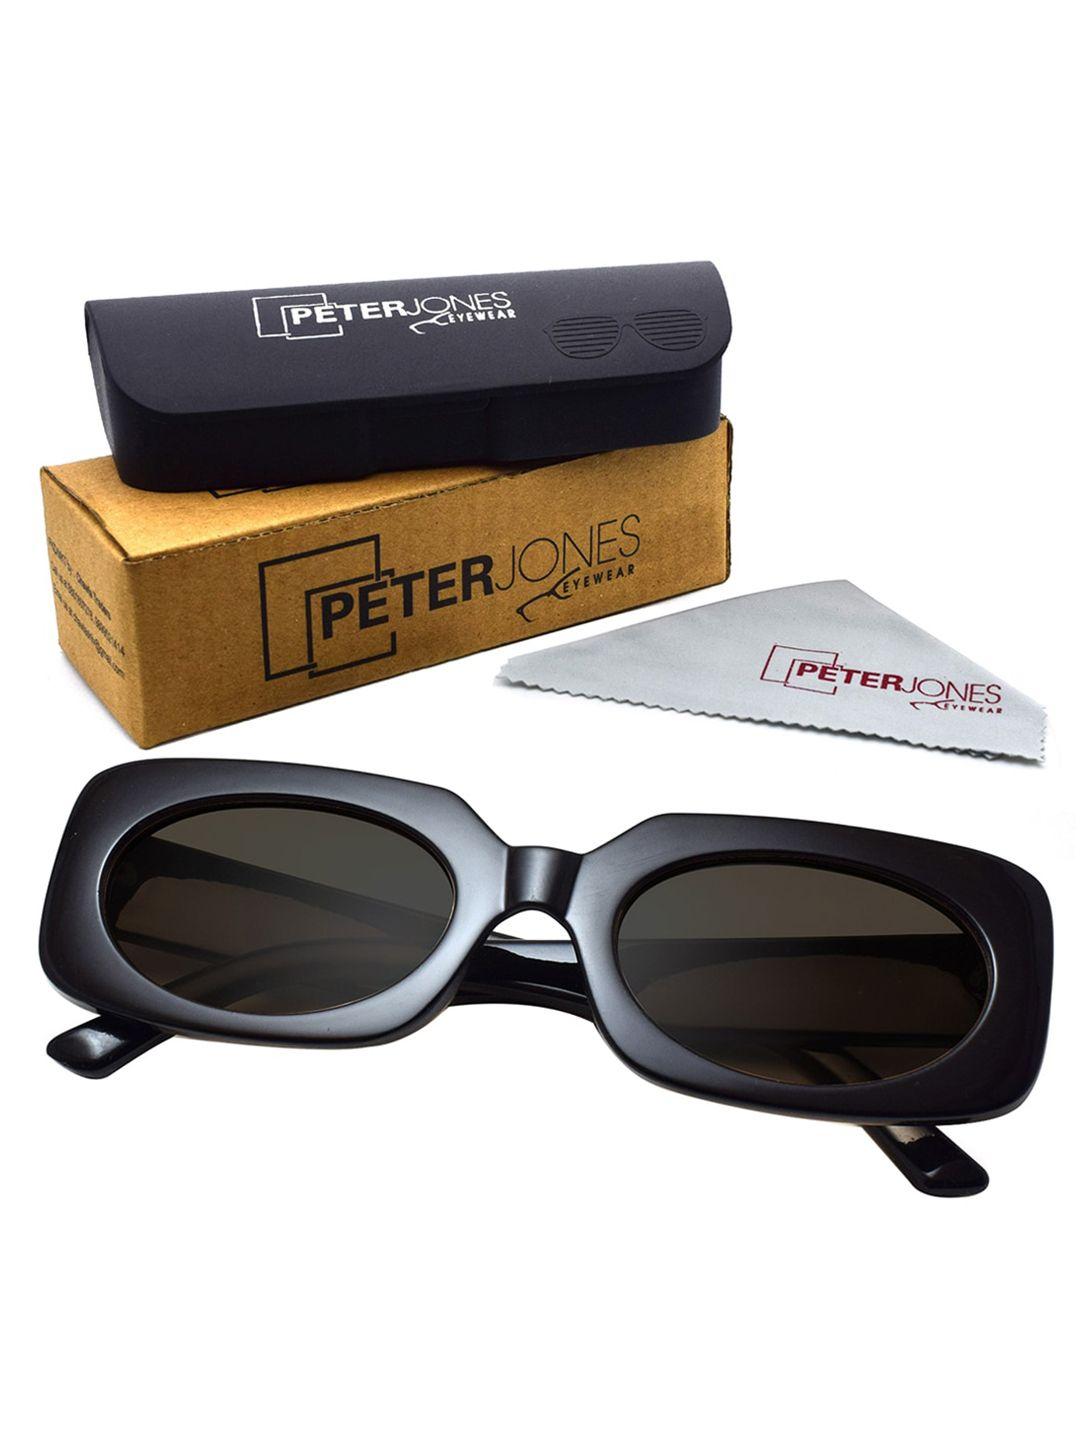 peter jones eyewear square sunglasses with uv protected lens